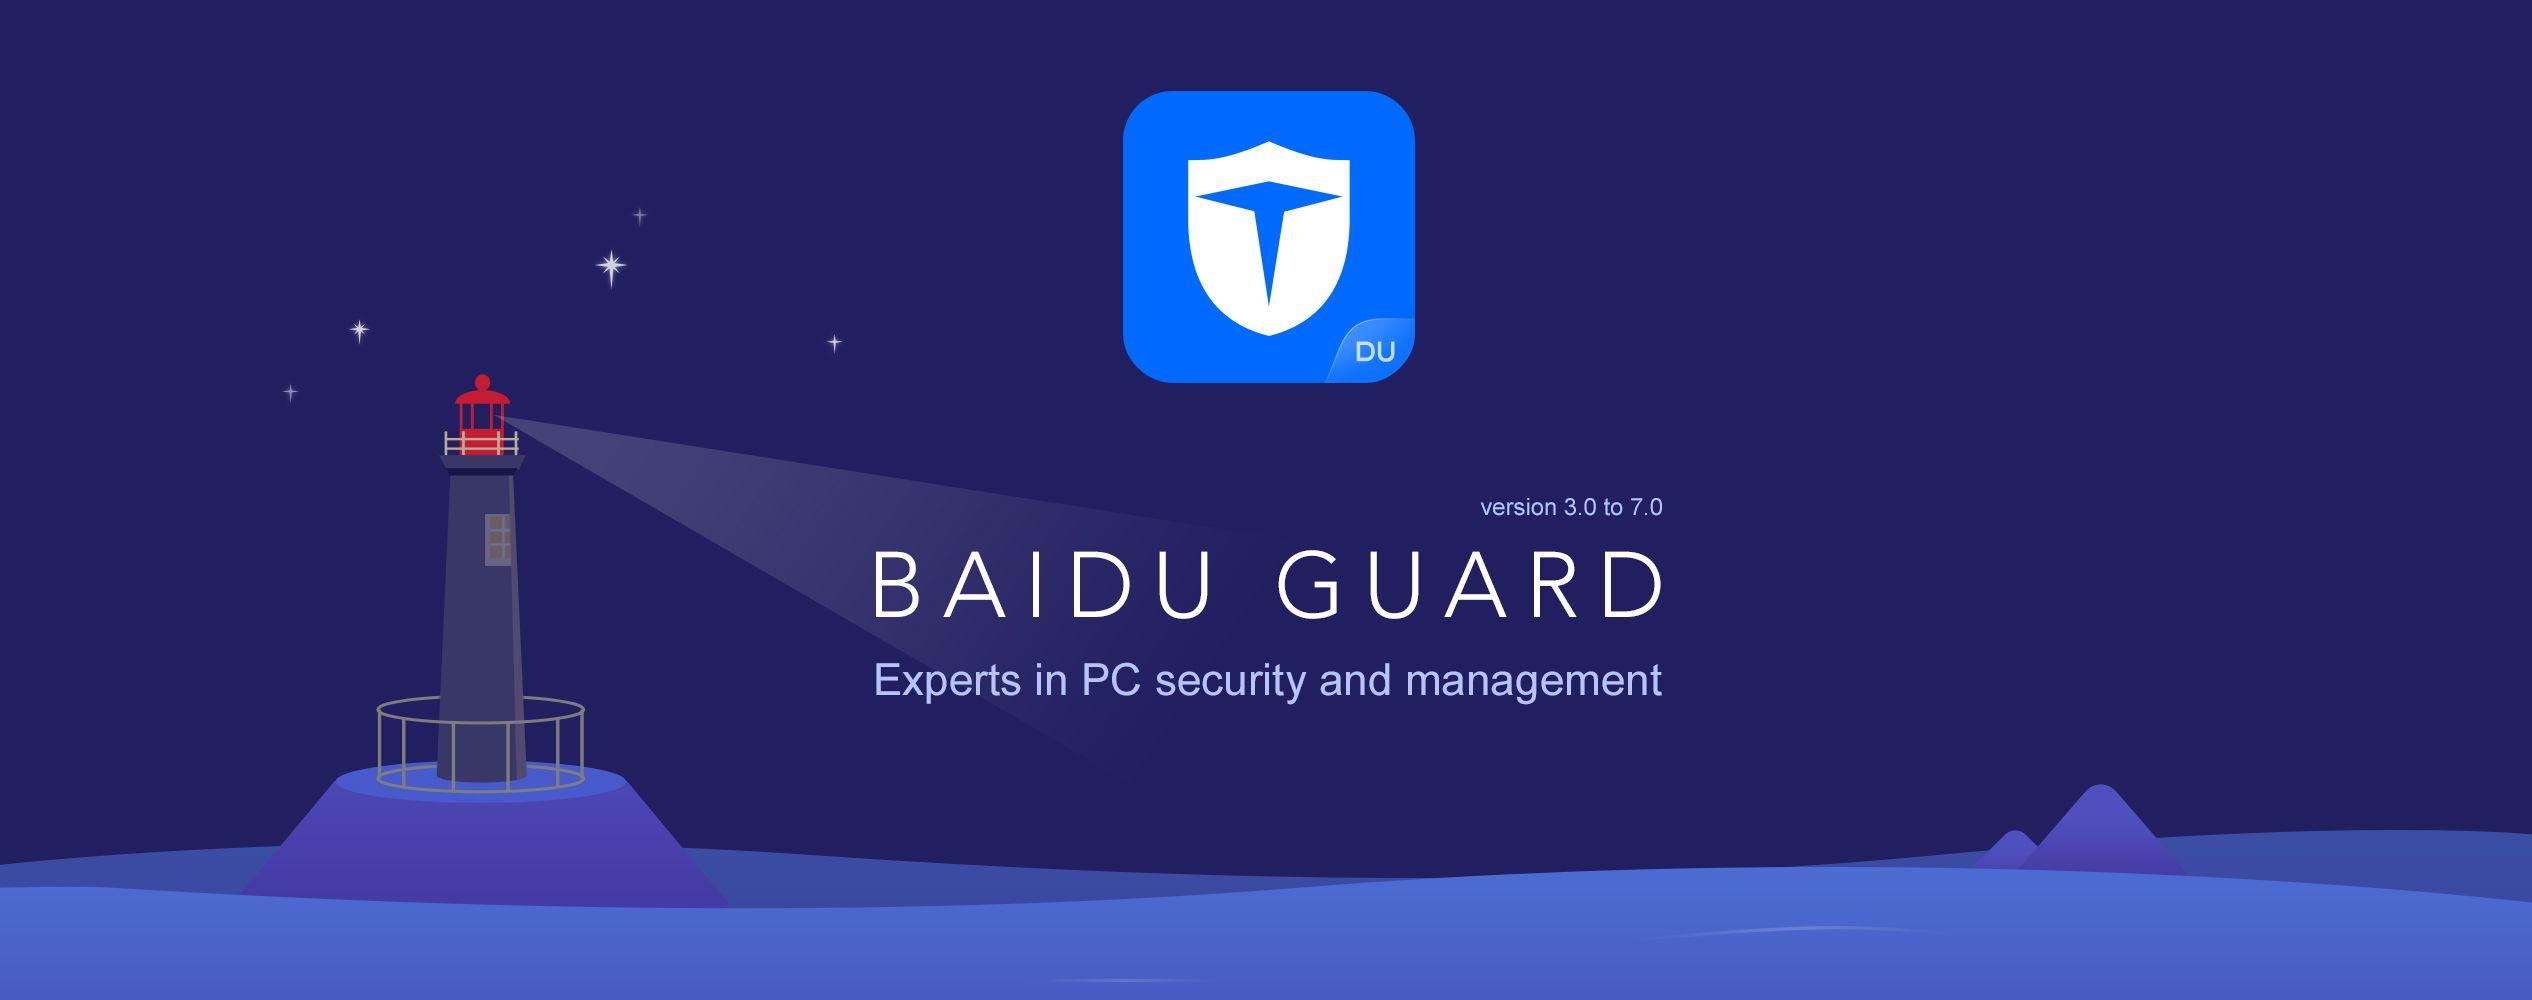 Baidu App Logo - Ran Tian